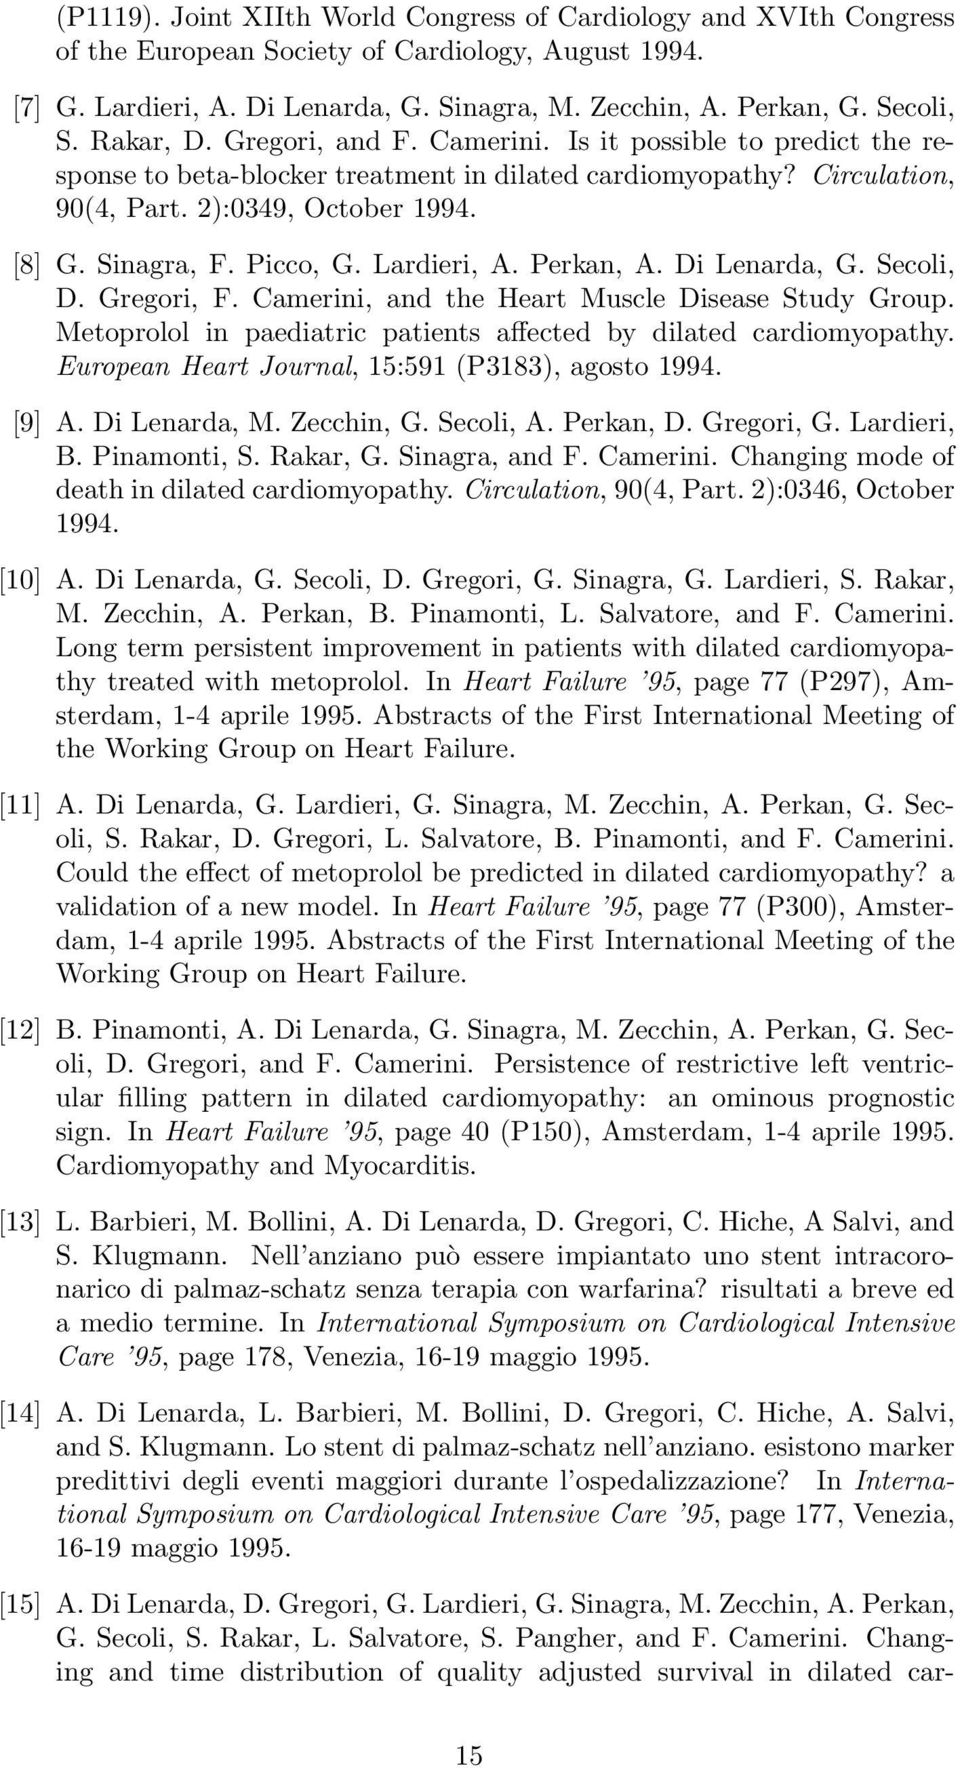 Sinagra, F. Picco, G. Lardieri, A. Perkan, A. Di Lenarda, G. Secoli, D. Gregori, F. Camerini, and the Heart Muscle Disease Study Group.